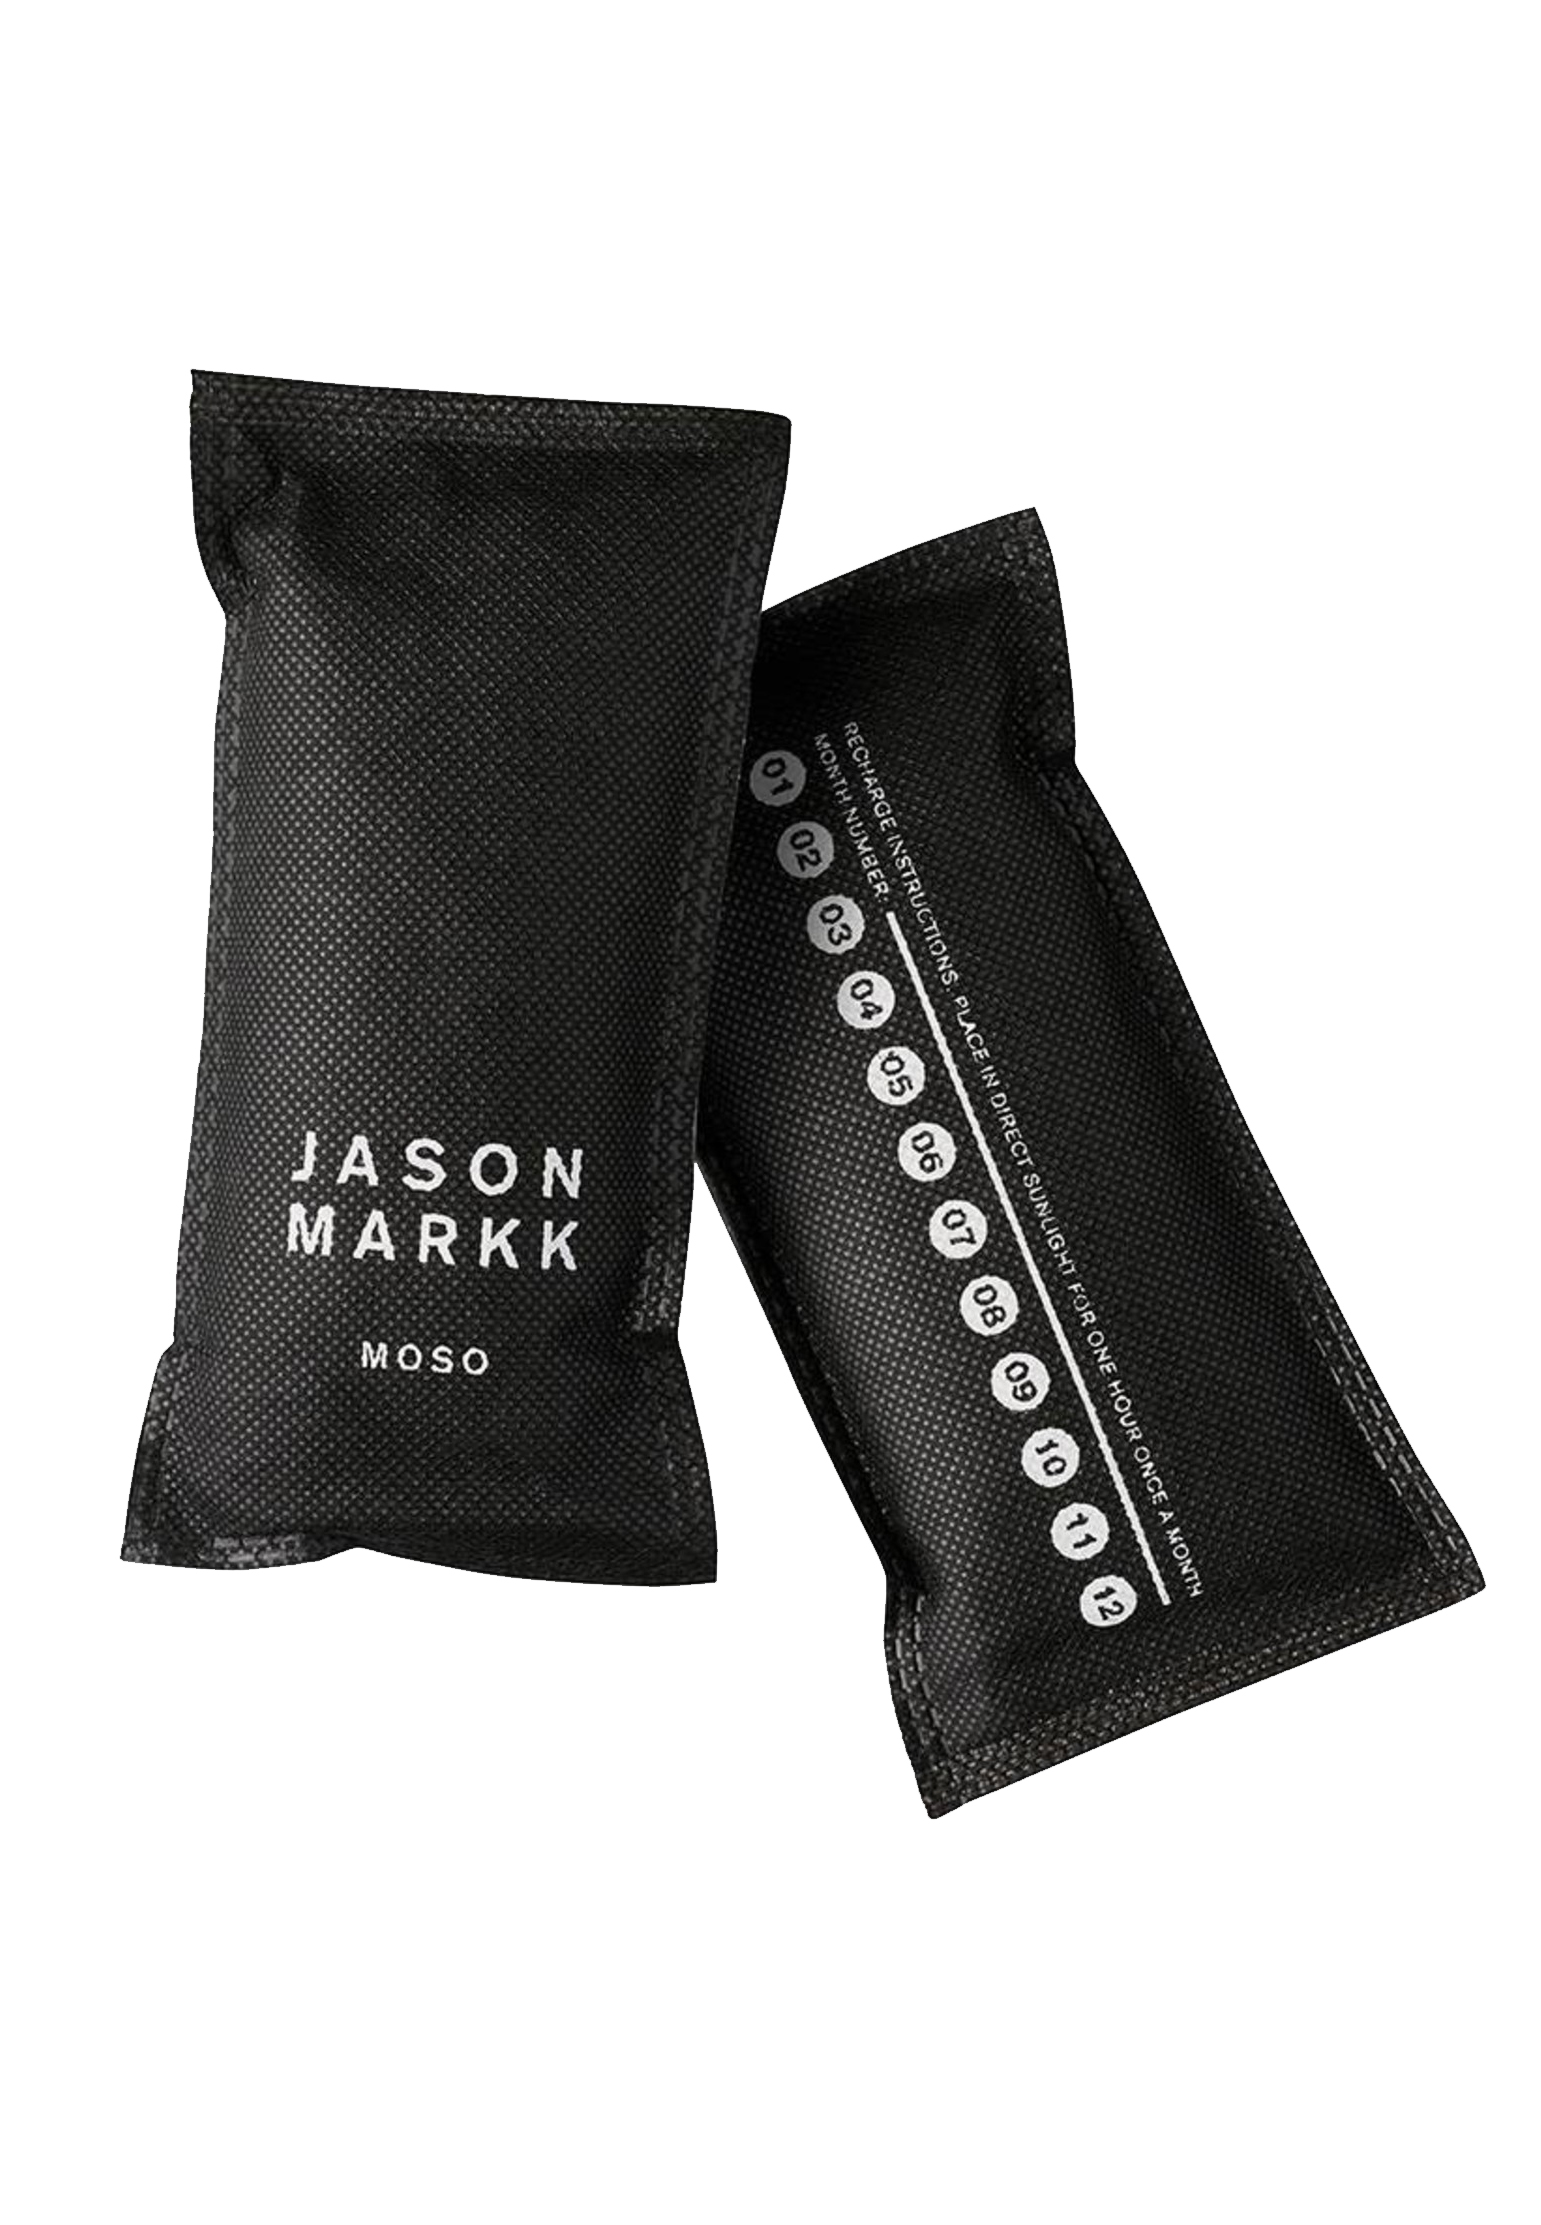 Дезодорант для обуви JASON MARKK Черный